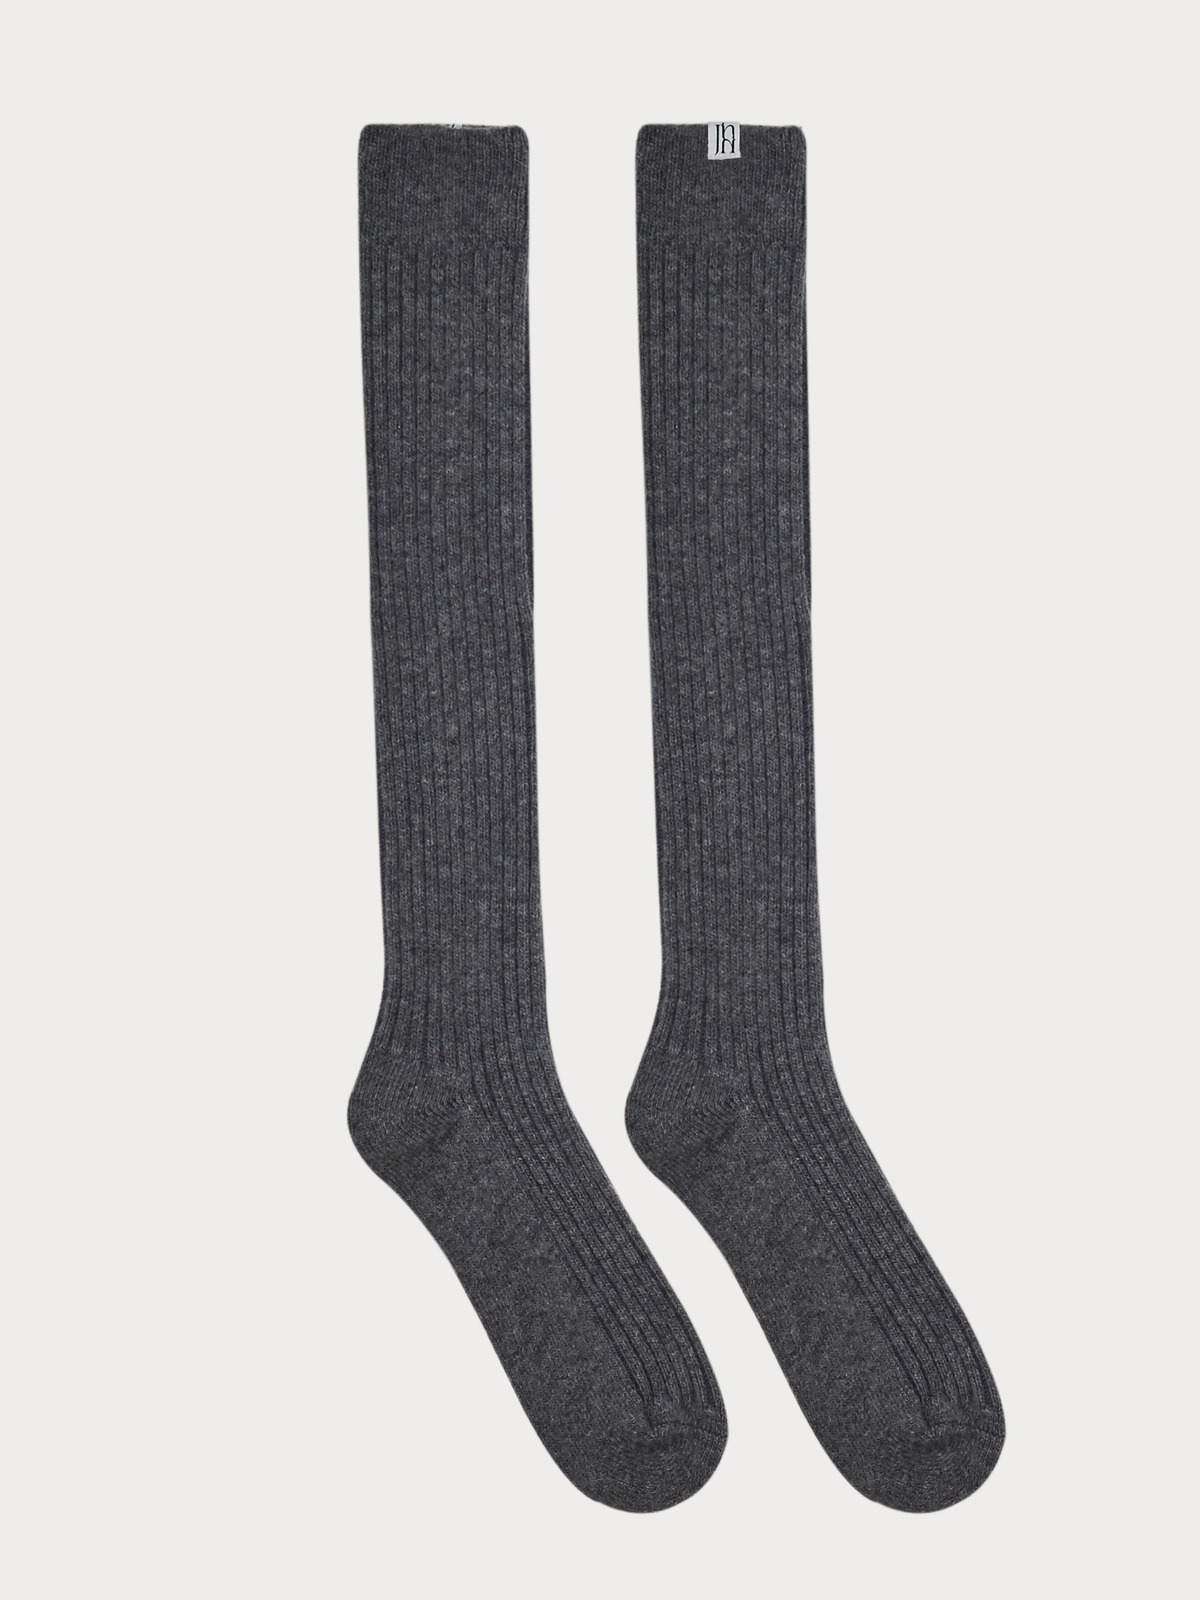 010 Cashmere Knee Knit Socks (Charcoal)